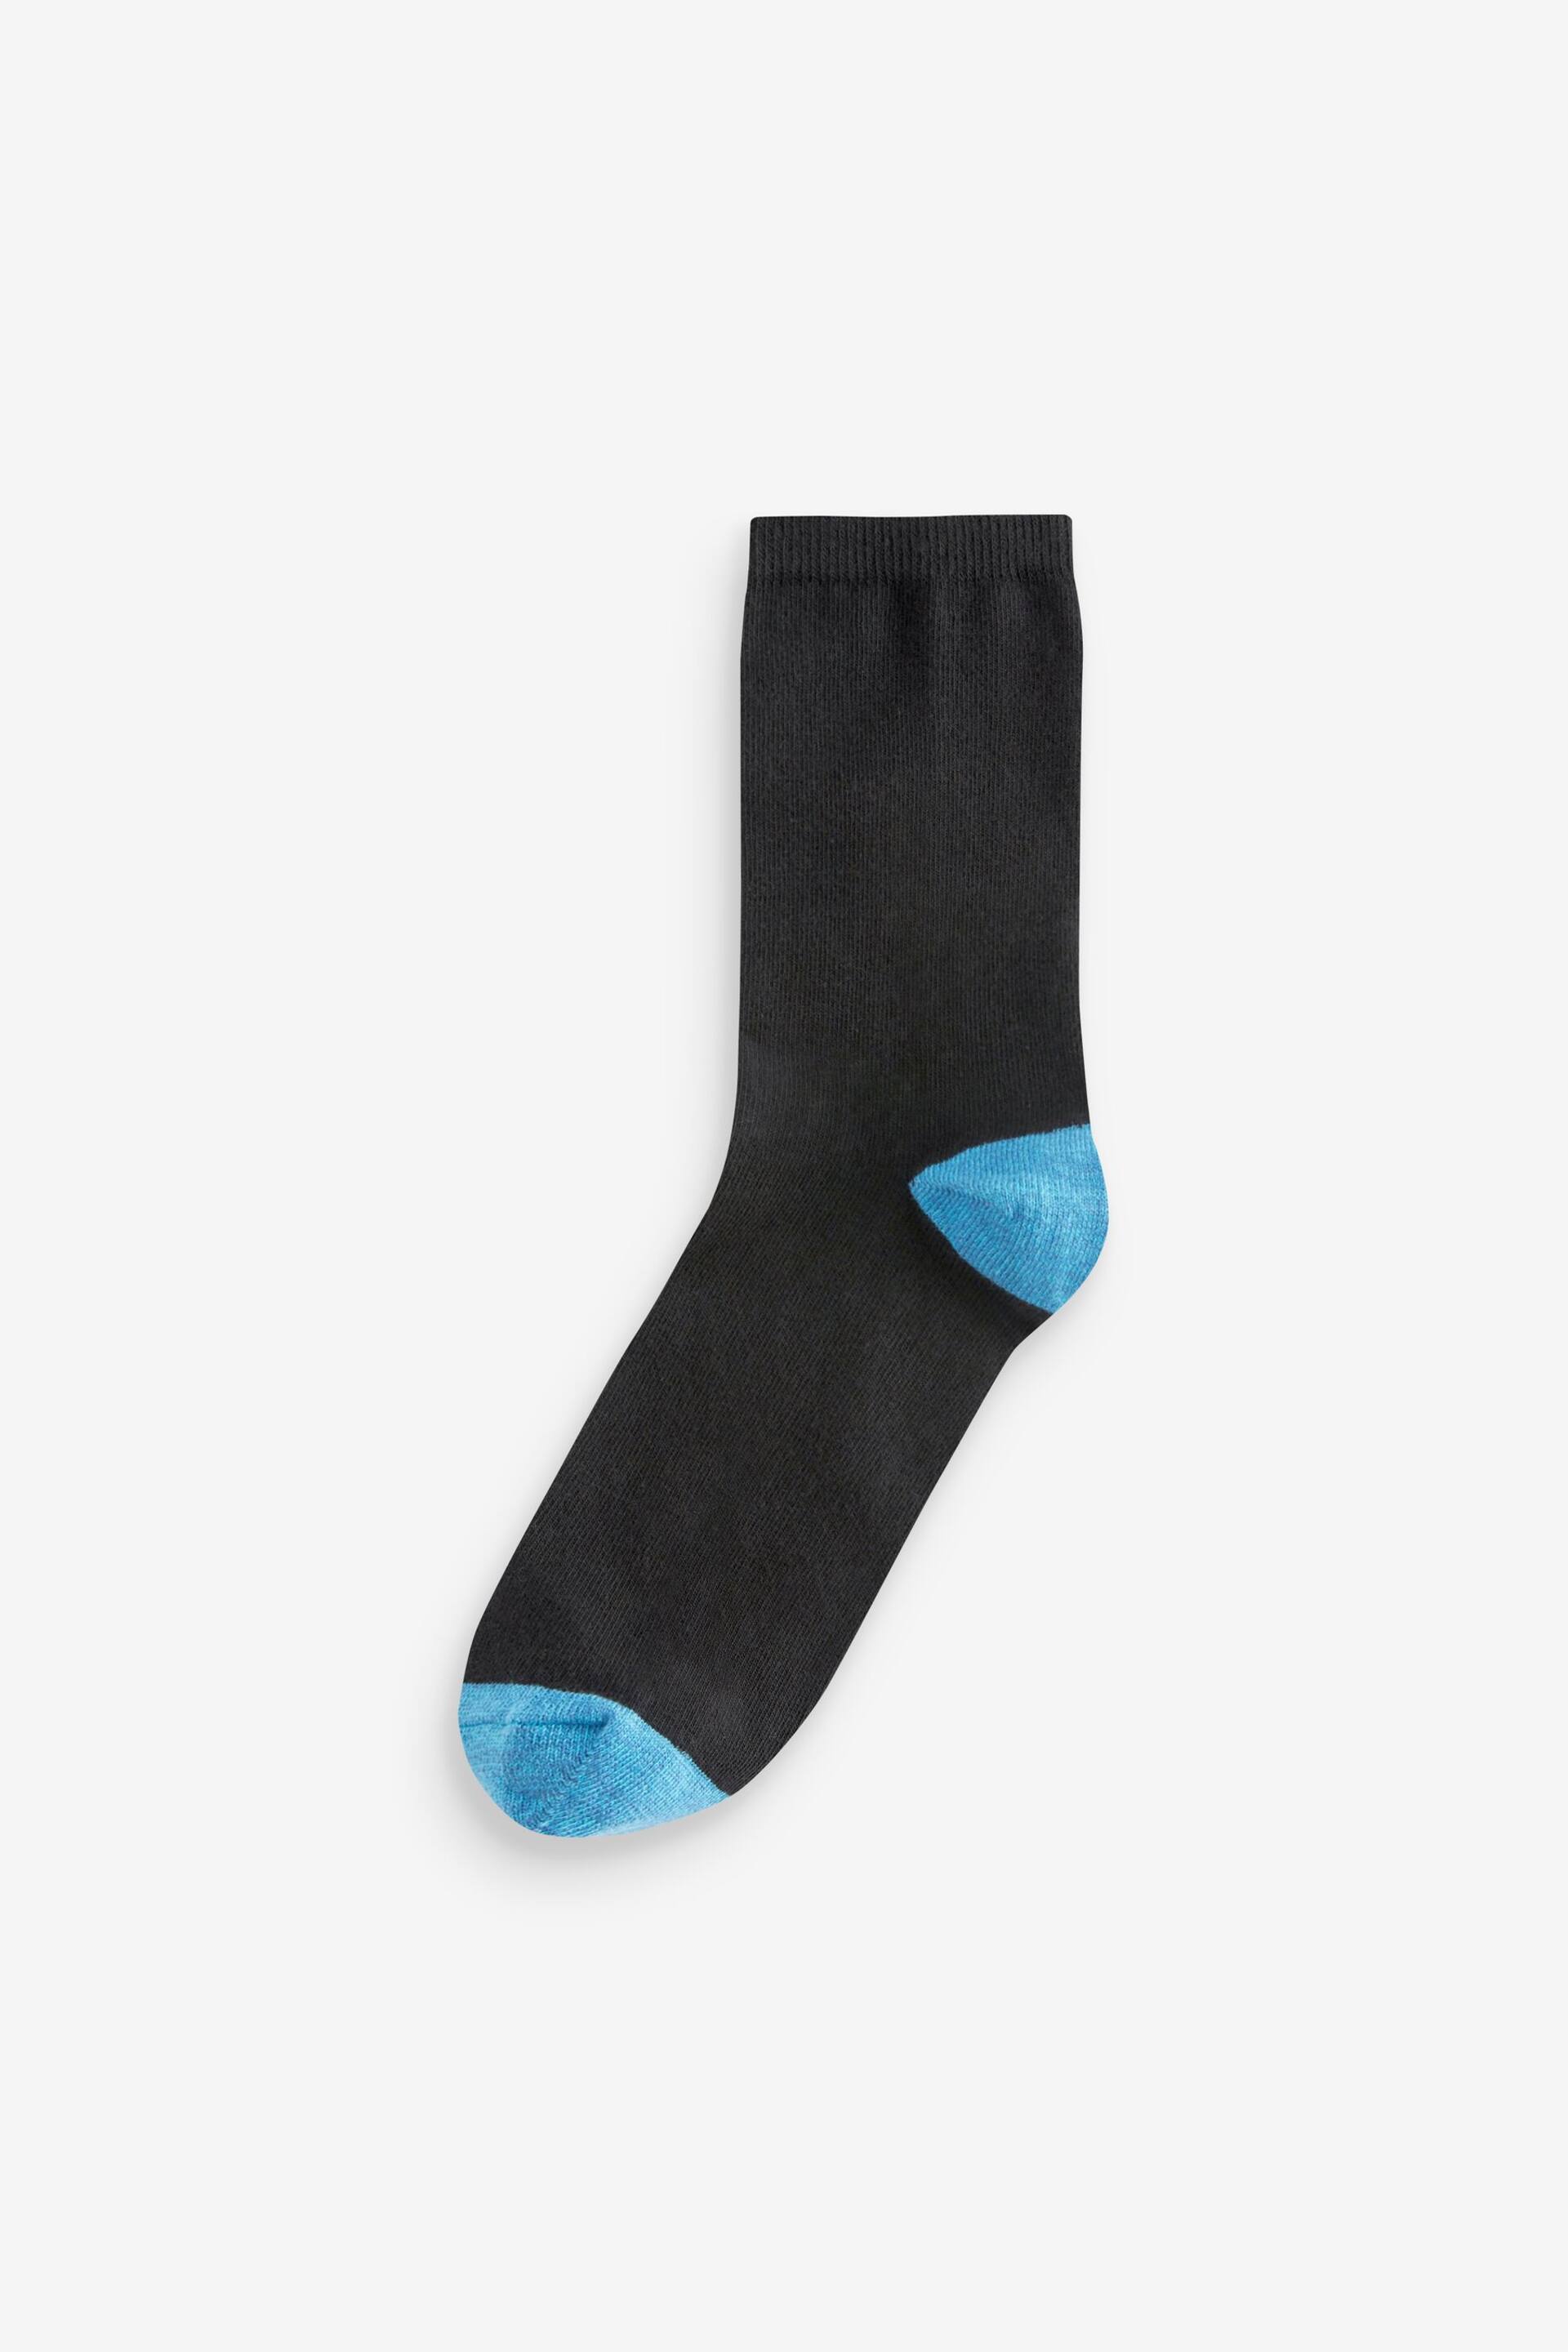 Black Ankle Socks 4 Pack - Image 5 of 5